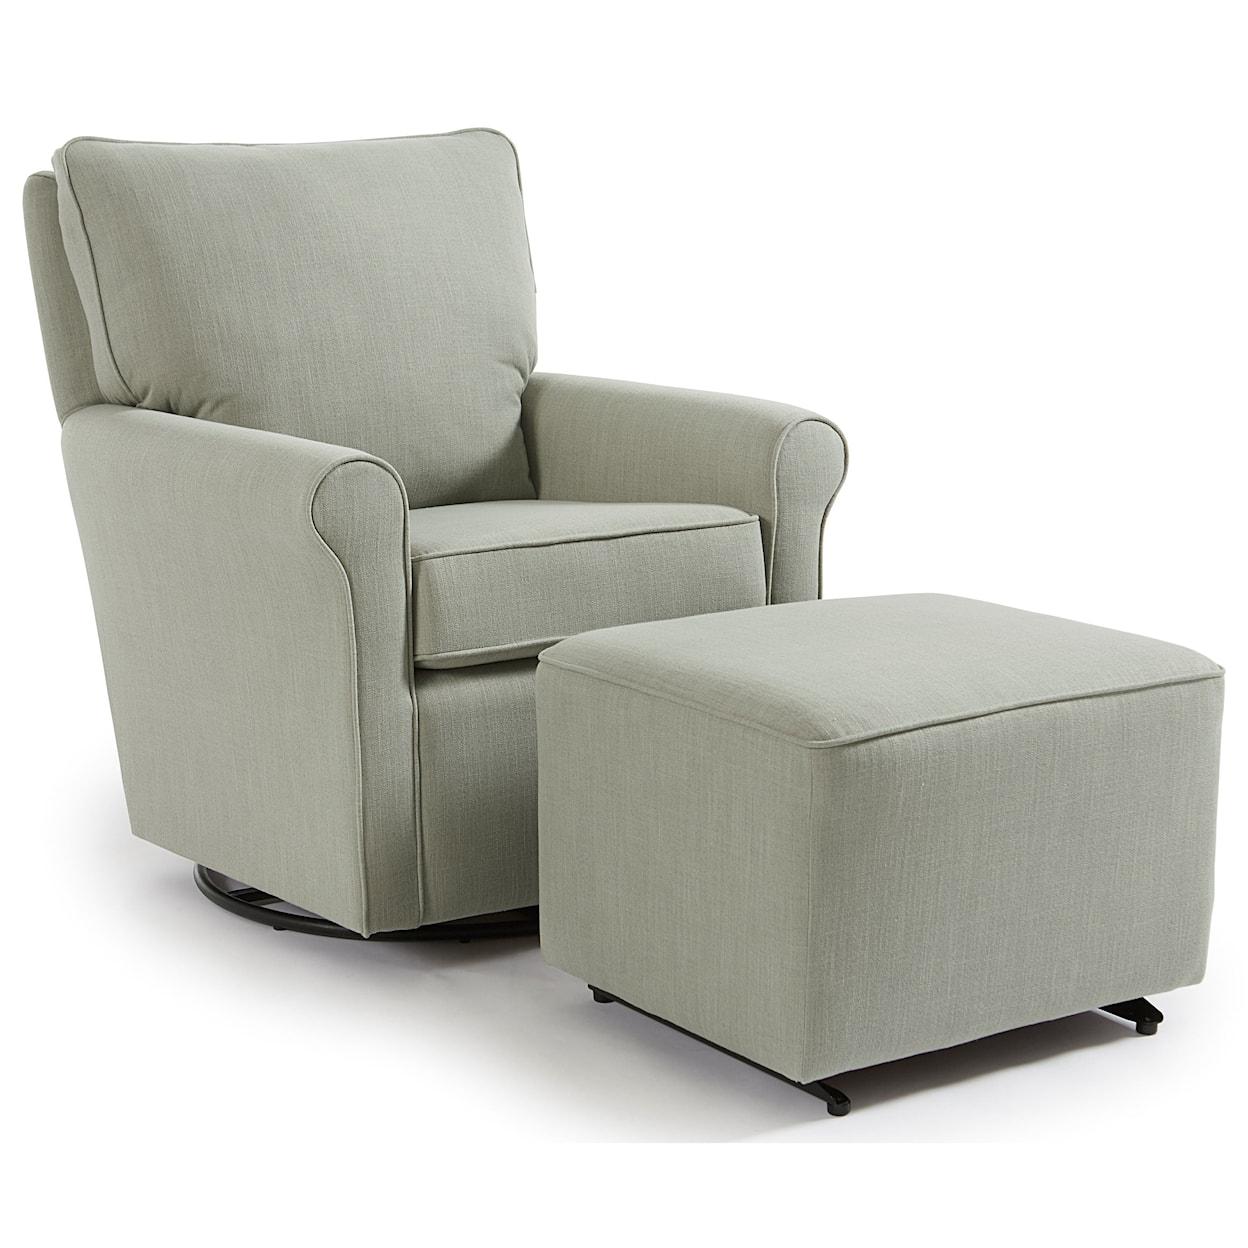 Best Home Furnishings Kacey Swivel Glider Chair & Ottoman